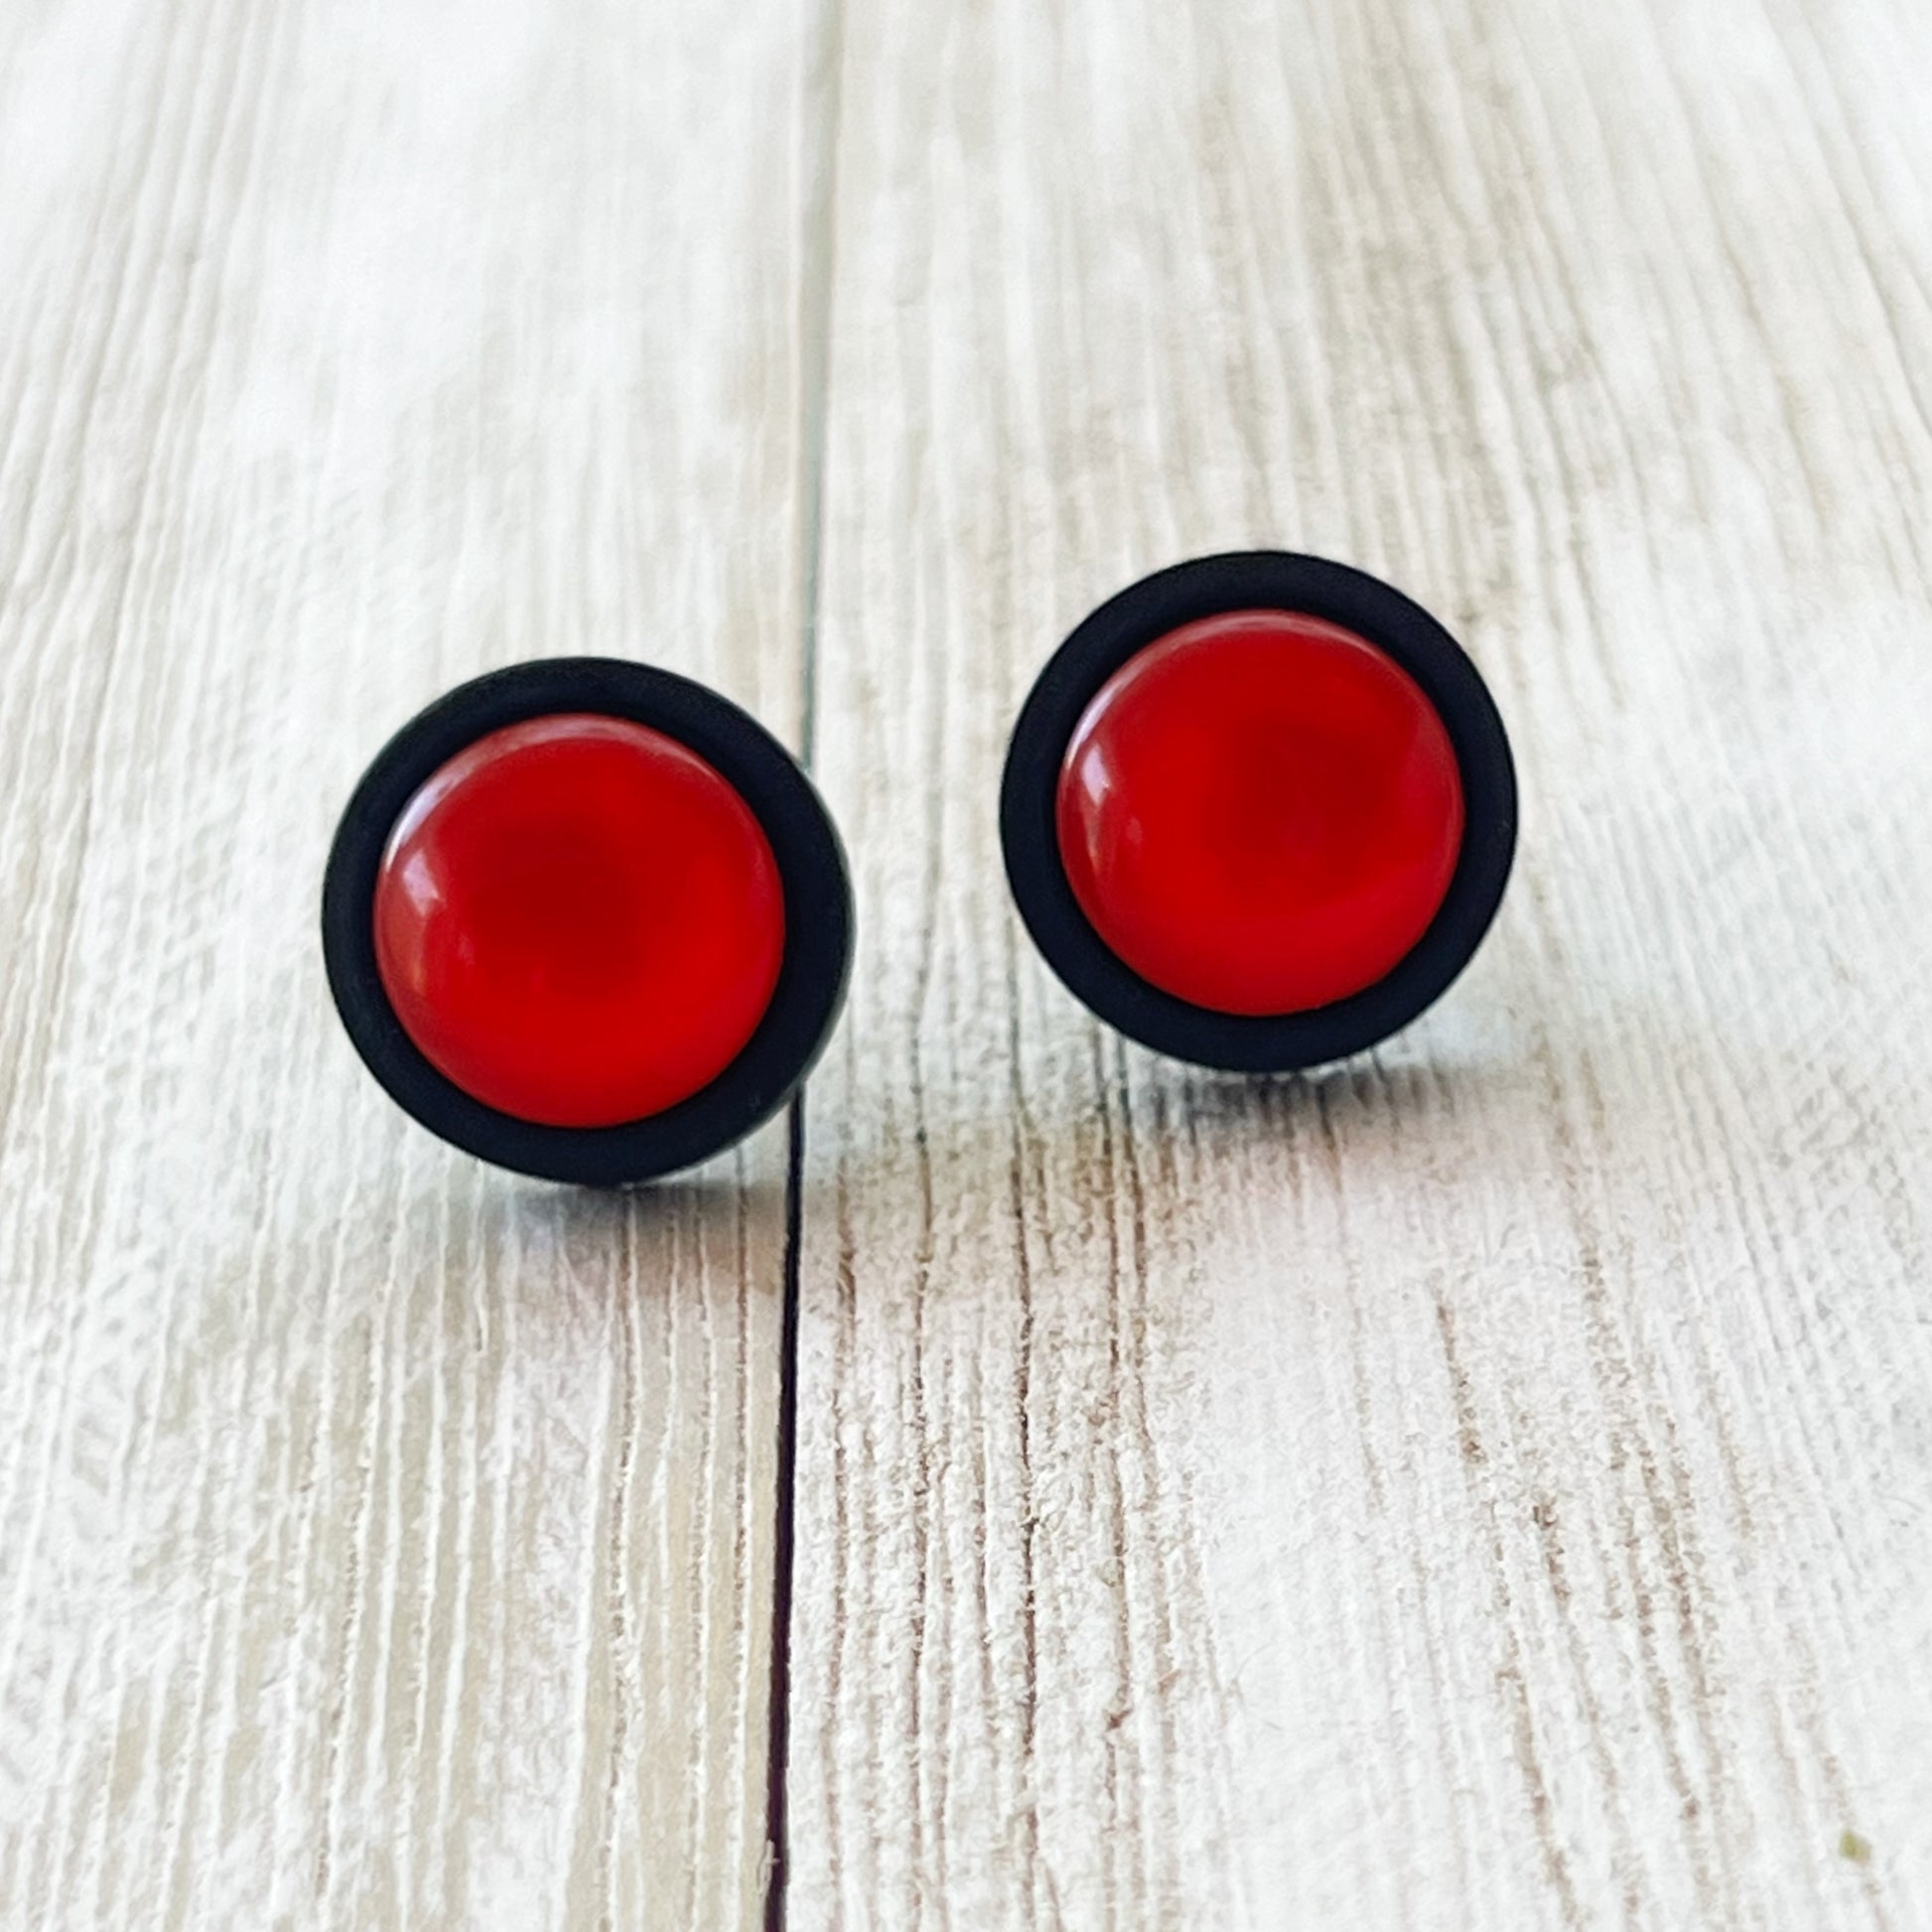 Red Resin Black Wood Unisex Stud Earrings - Stylish & Versatile Accessories